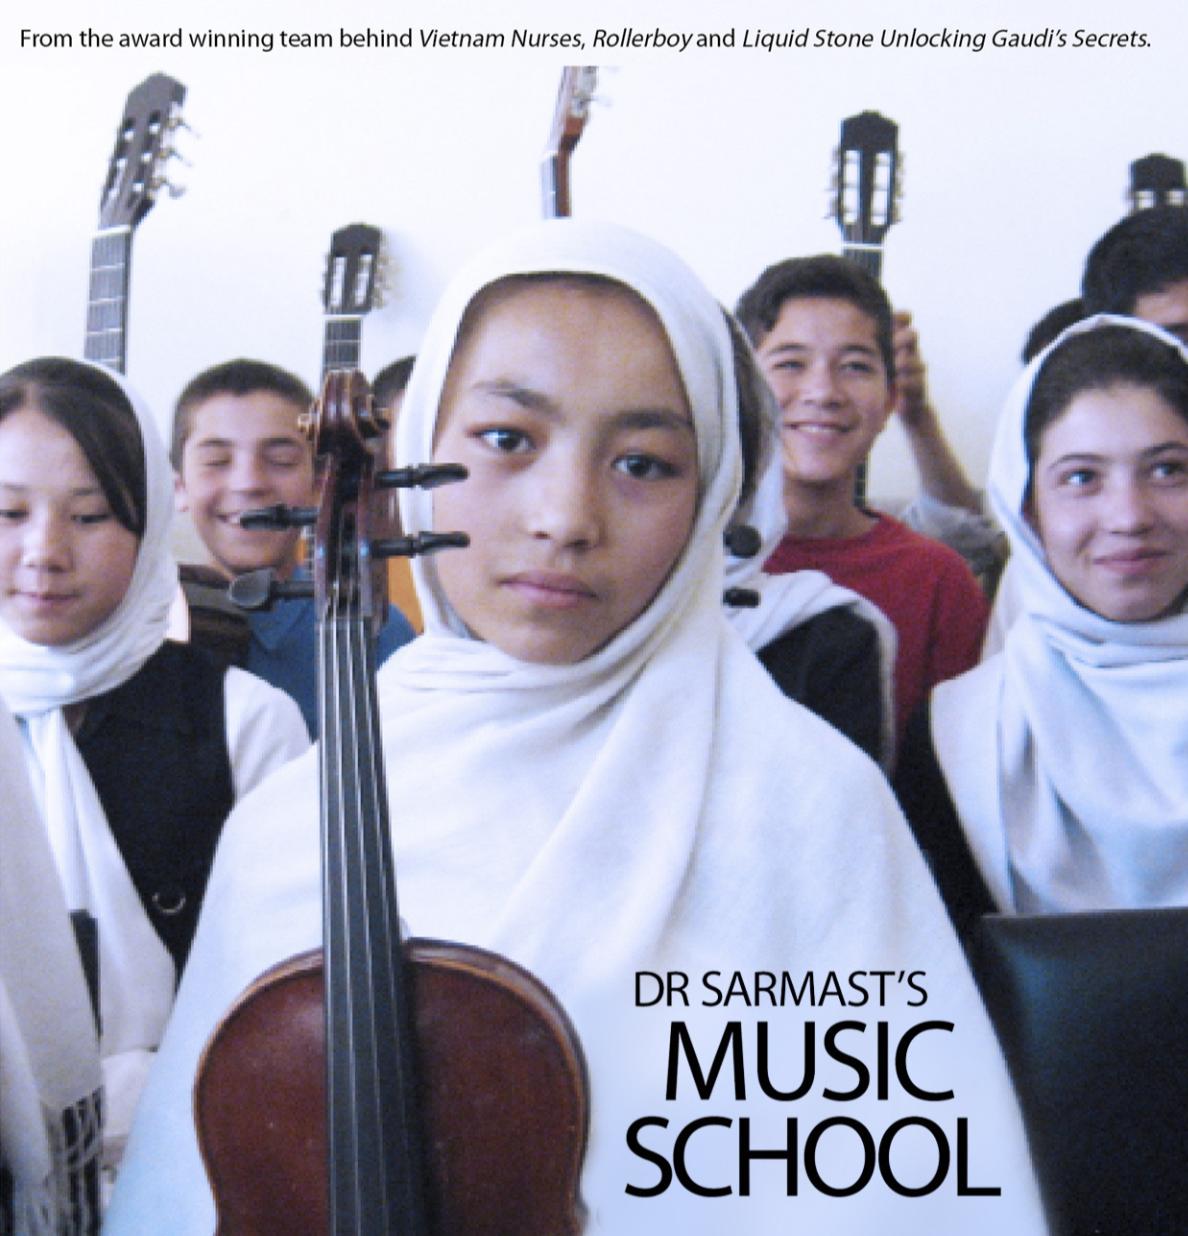 Dr Sarmast's Music School